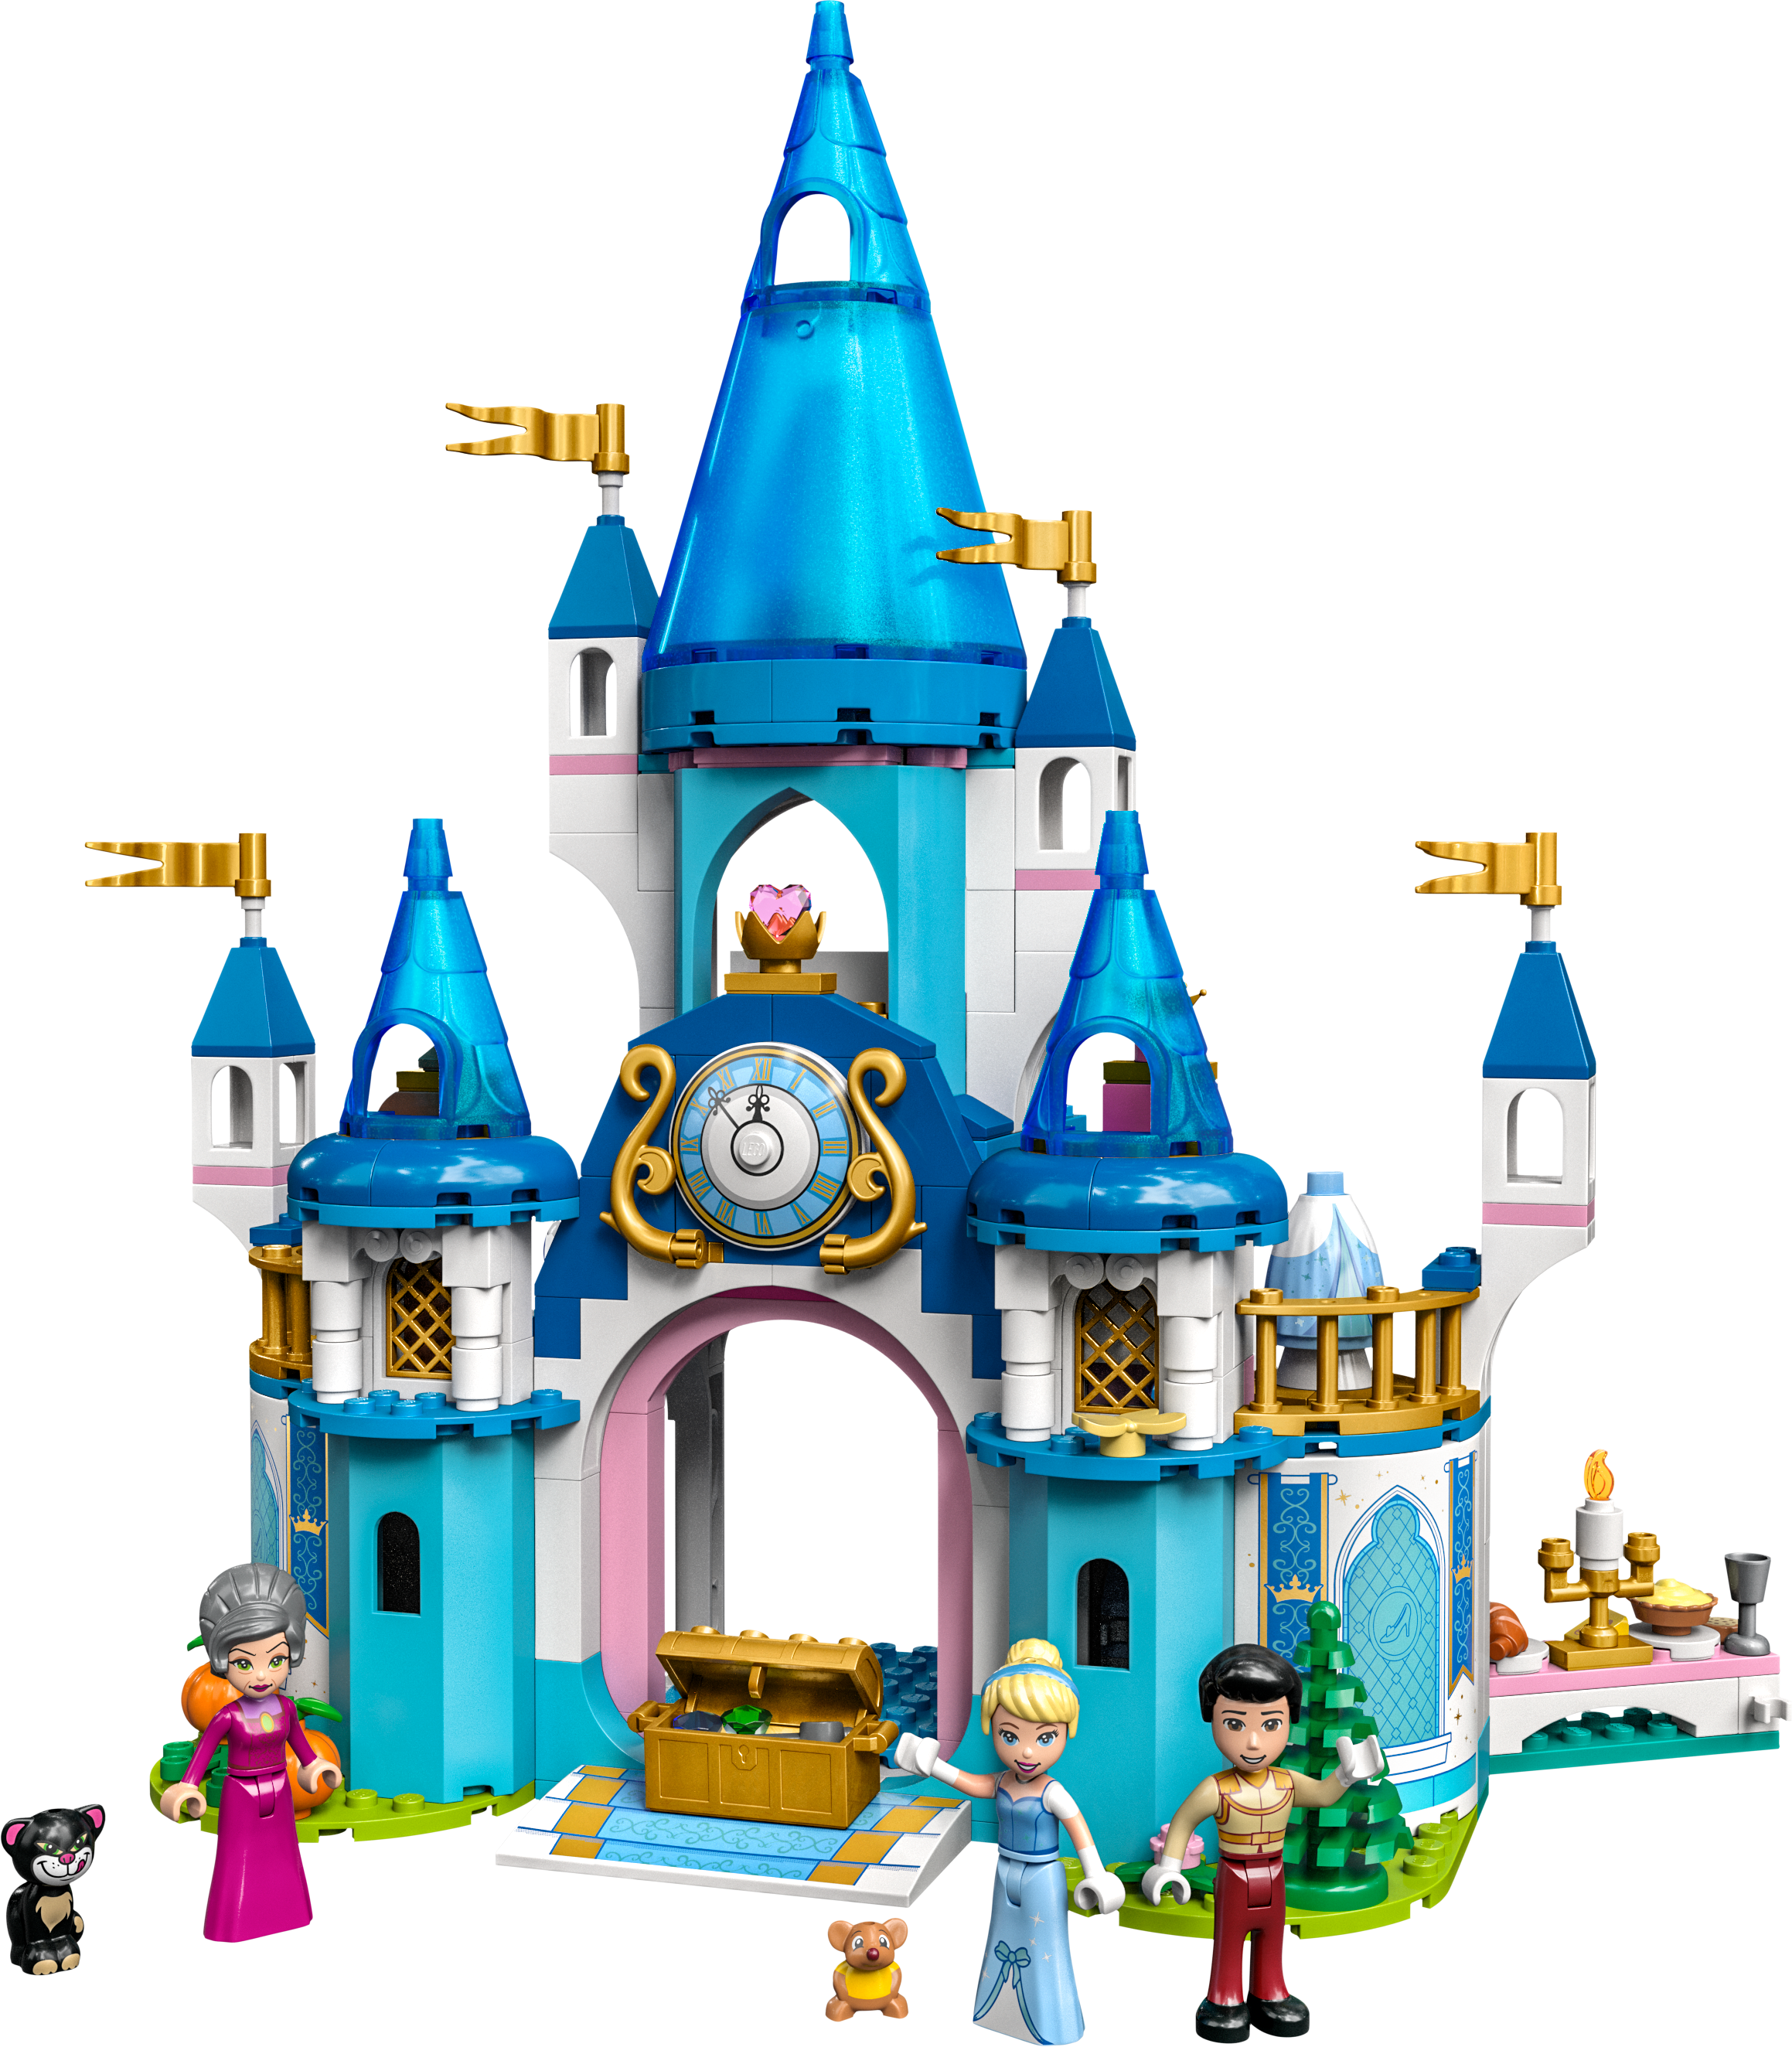 Lego 43206 Cinderella and Prince Charming Castle